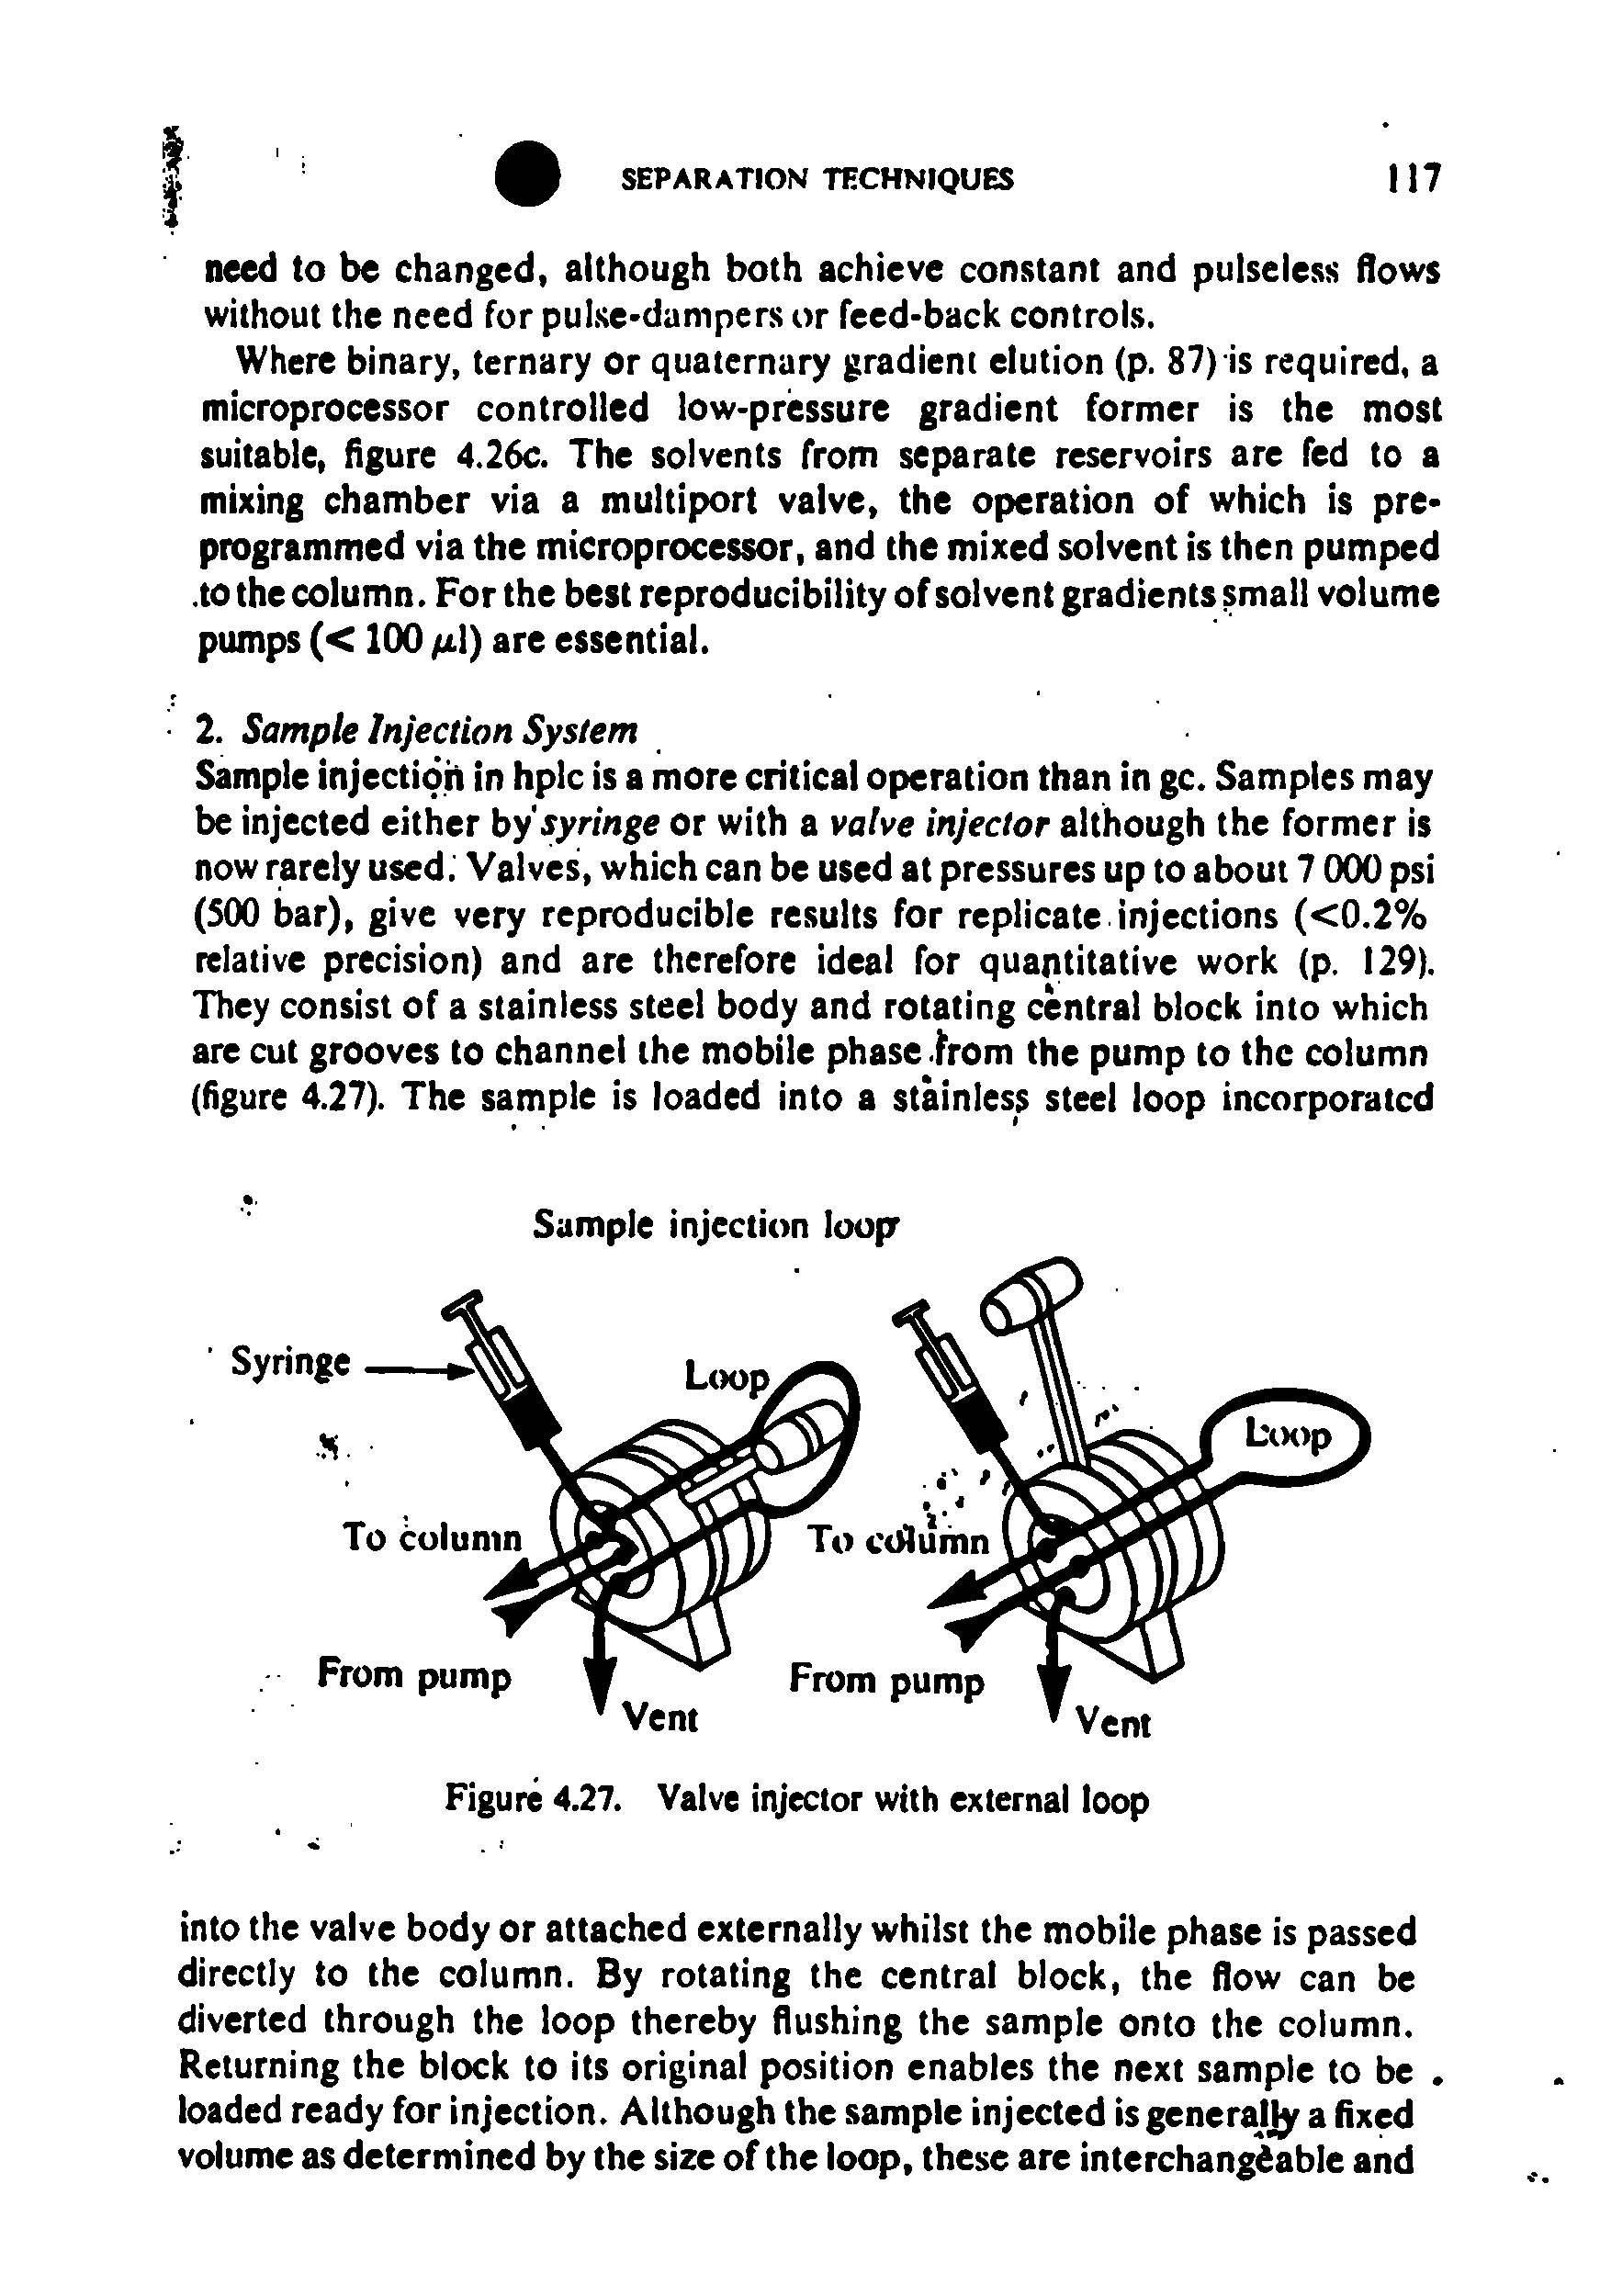 Figure 4.27. Valve injector with external loop...